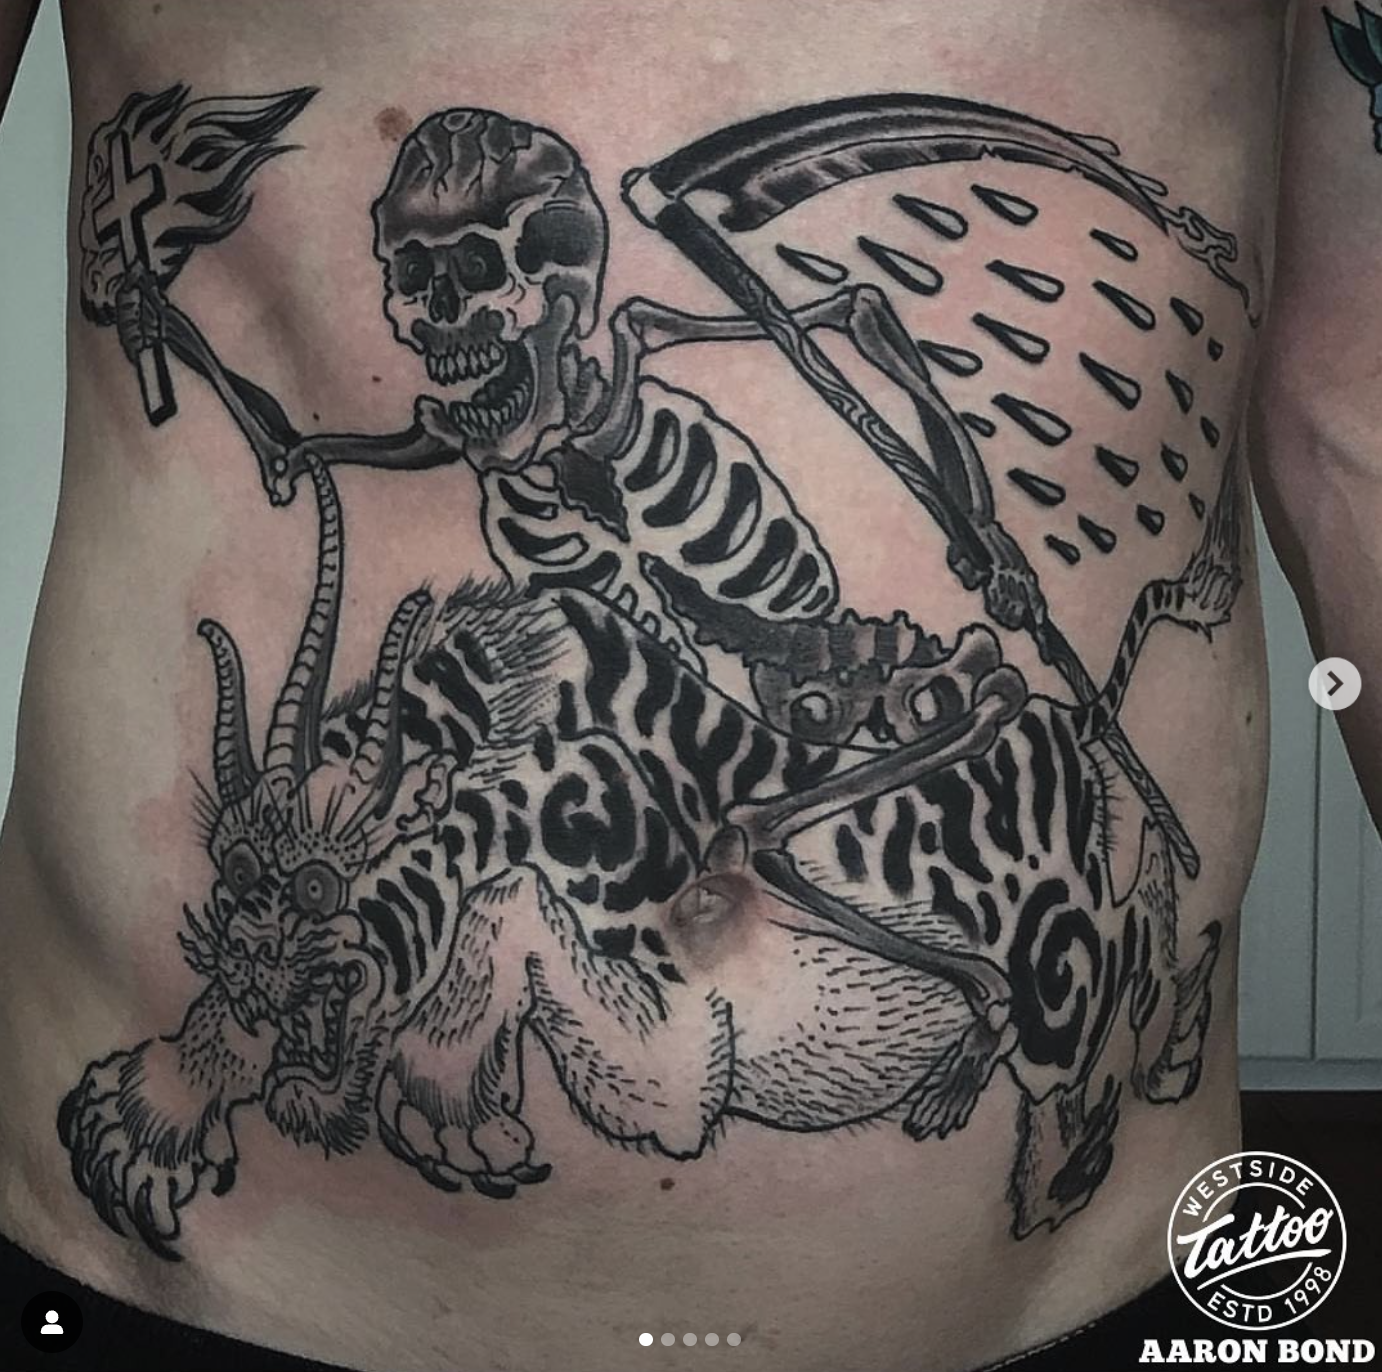 Aaron Bond Tattoo Brisbane